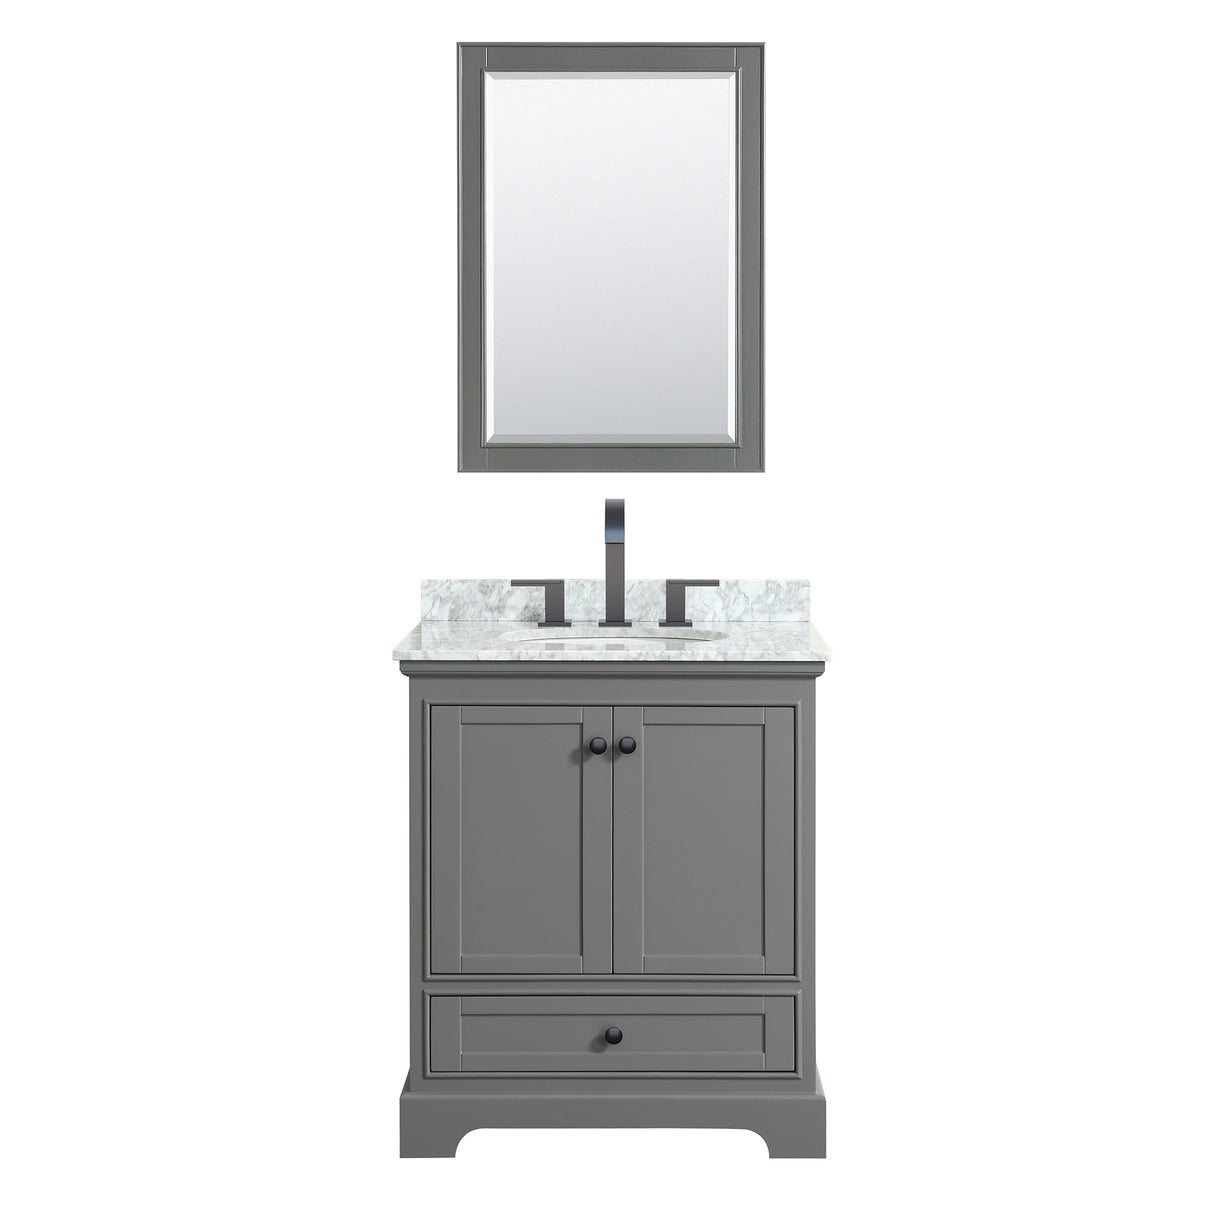 Deborah 30 Inch Single Bathroom Vanity in Dark Gray White Carrara Marble Countertop Undermount Oval Sink Matte Black Trim 24 Inch Mirror